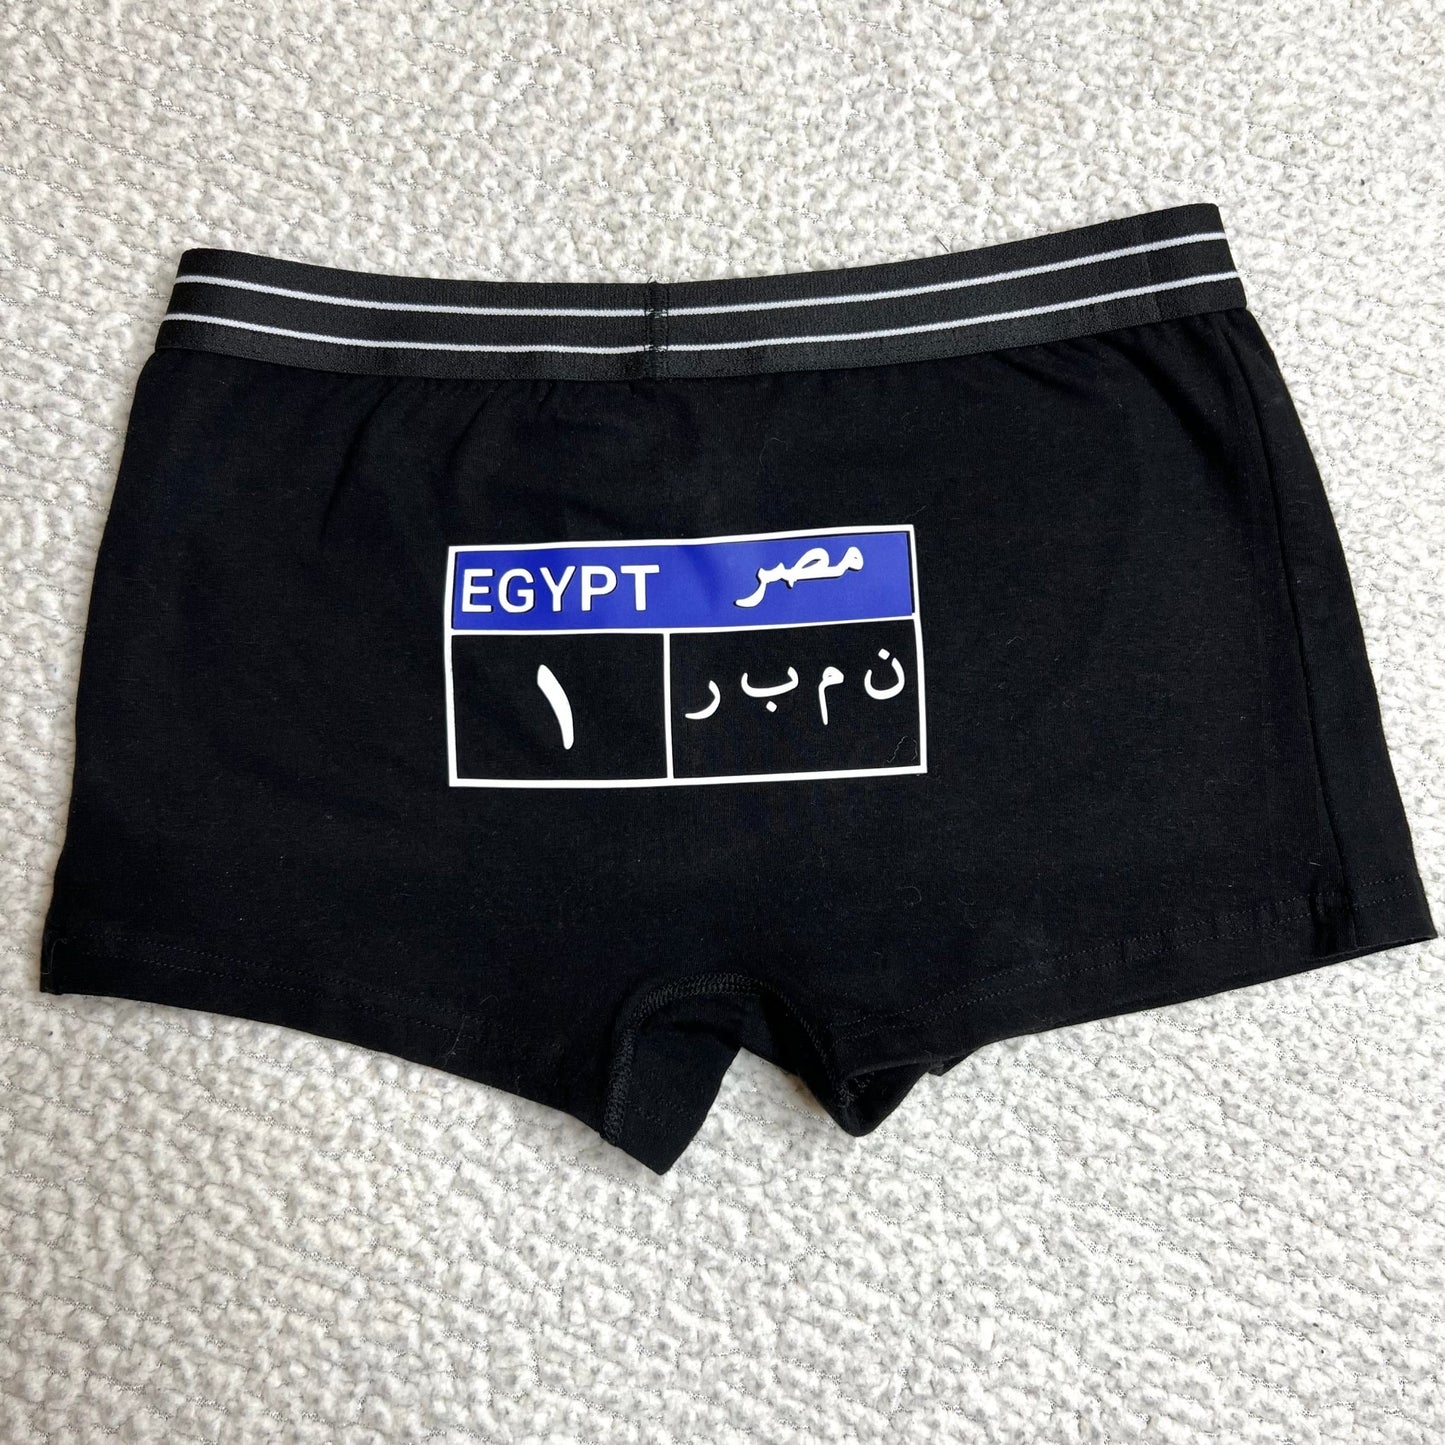 Men underwear - Car Number Plates - Etba3lly